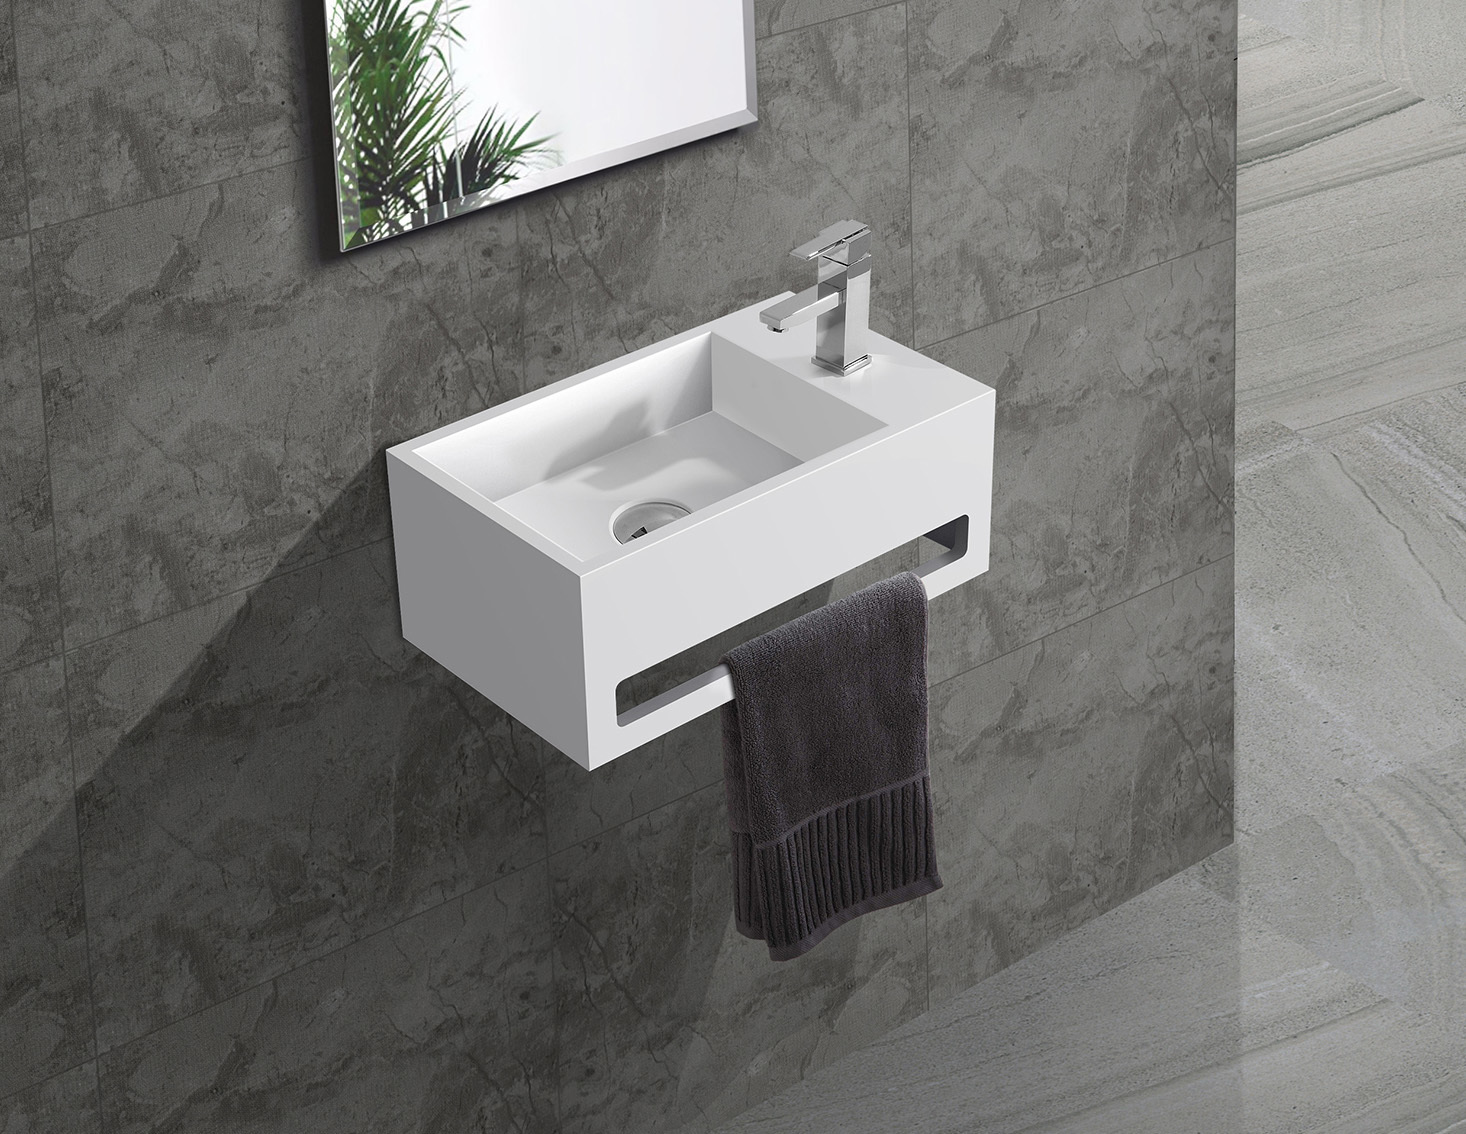 white size bath KingKonree Brand wall mounted bathroom basin factory